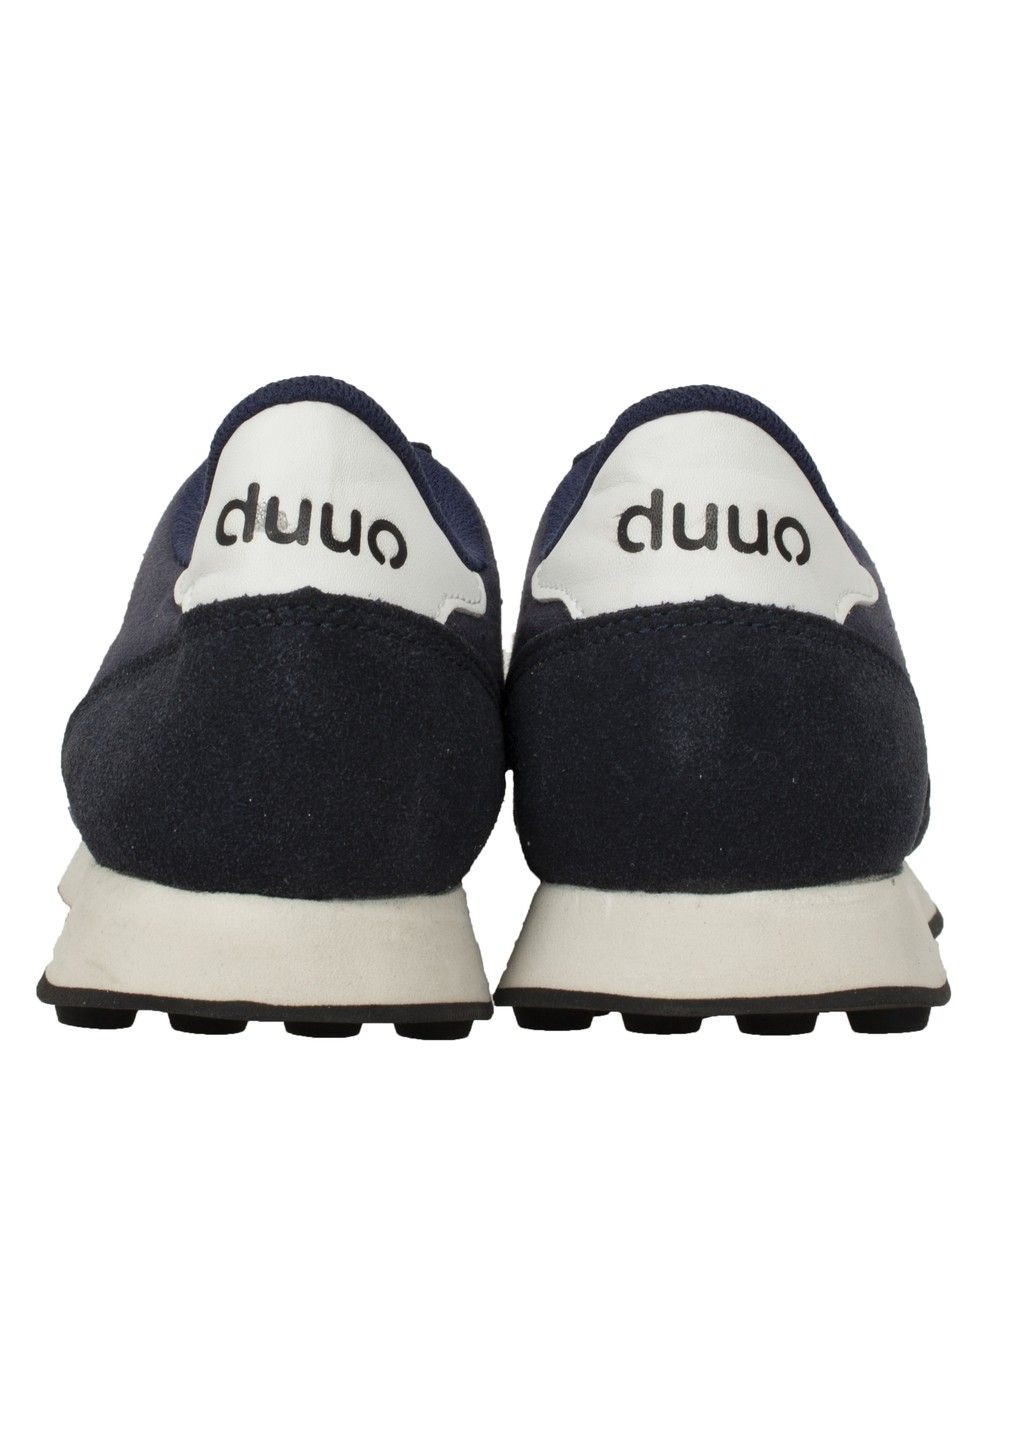 Синій кросівки duuo No Brand